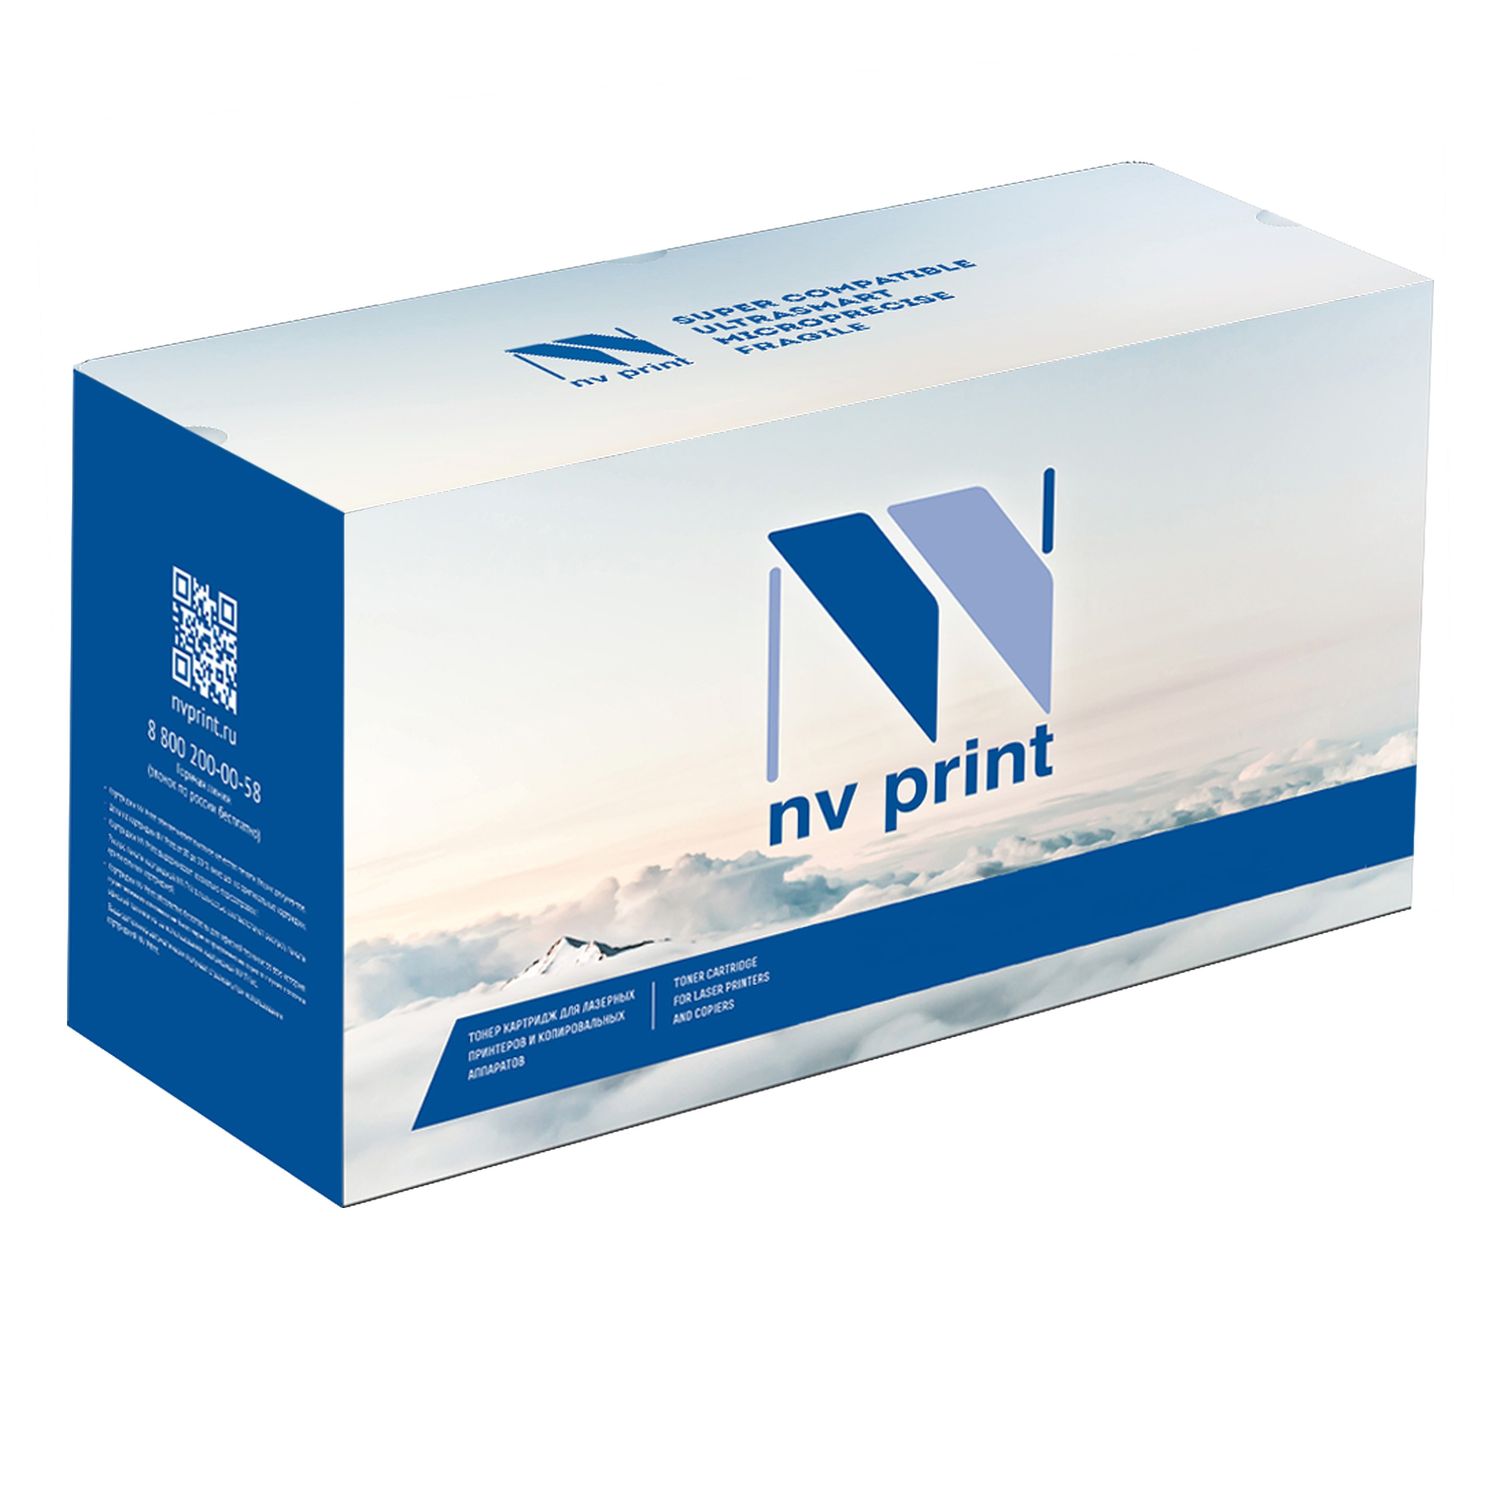 Картридж NV Print совместимый NV-T106R02778 для Xerox Phaser 3052/3260/WorkCentre 3215/3225 (3000k) картридж лазерный nv print nv 106r02778 для xerox p3052 3260 wc3215 3225 ресурс 3000 страниц